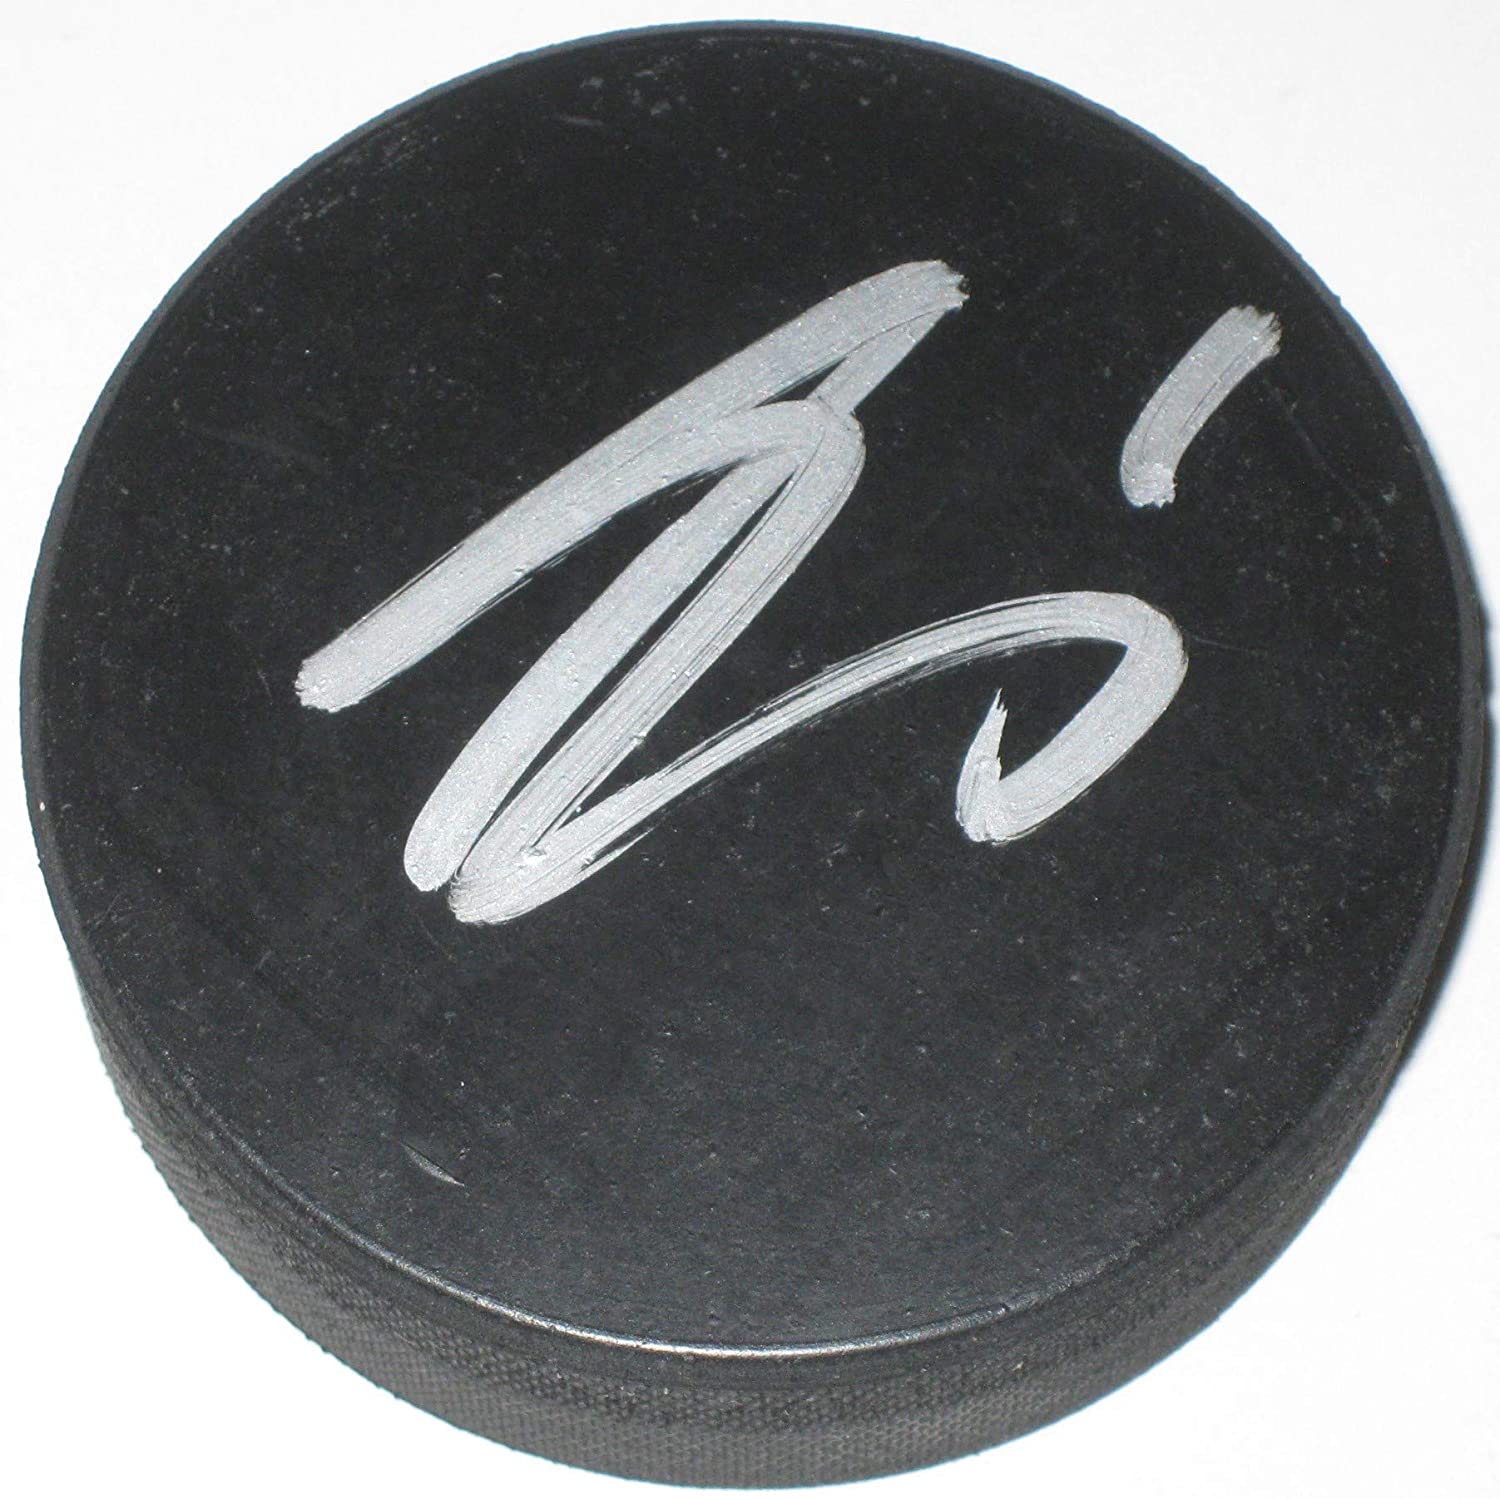 Evander Kane NHL Memorabilia, Evander Kane Collectibles, Verified